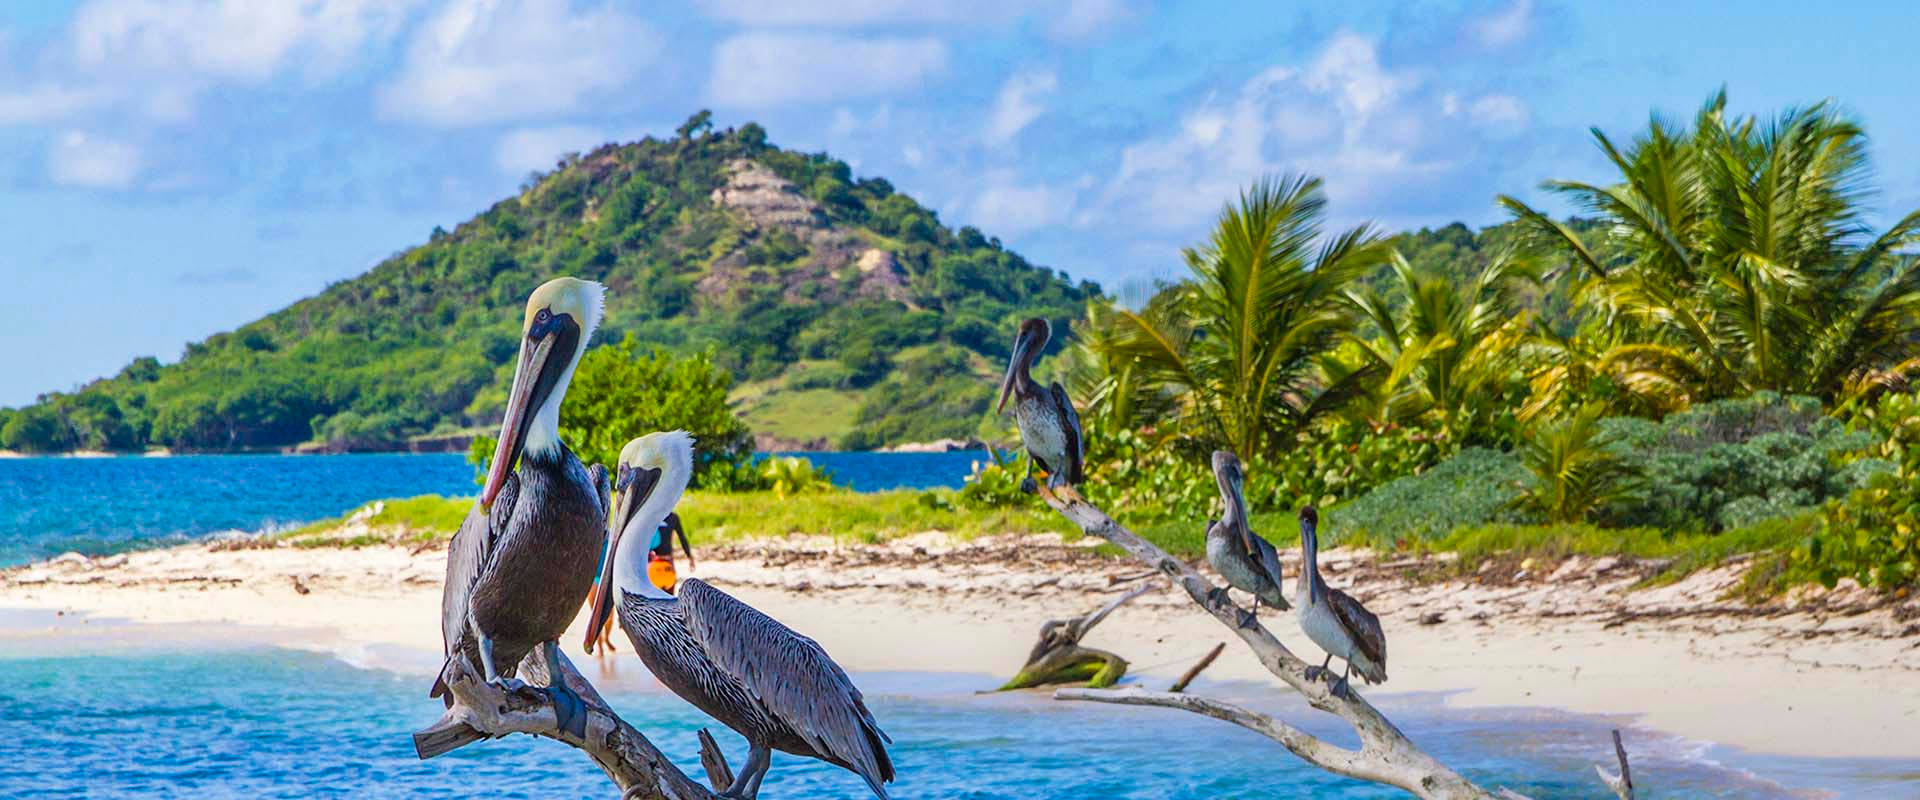 North America Grenada Pelican Wallpaper